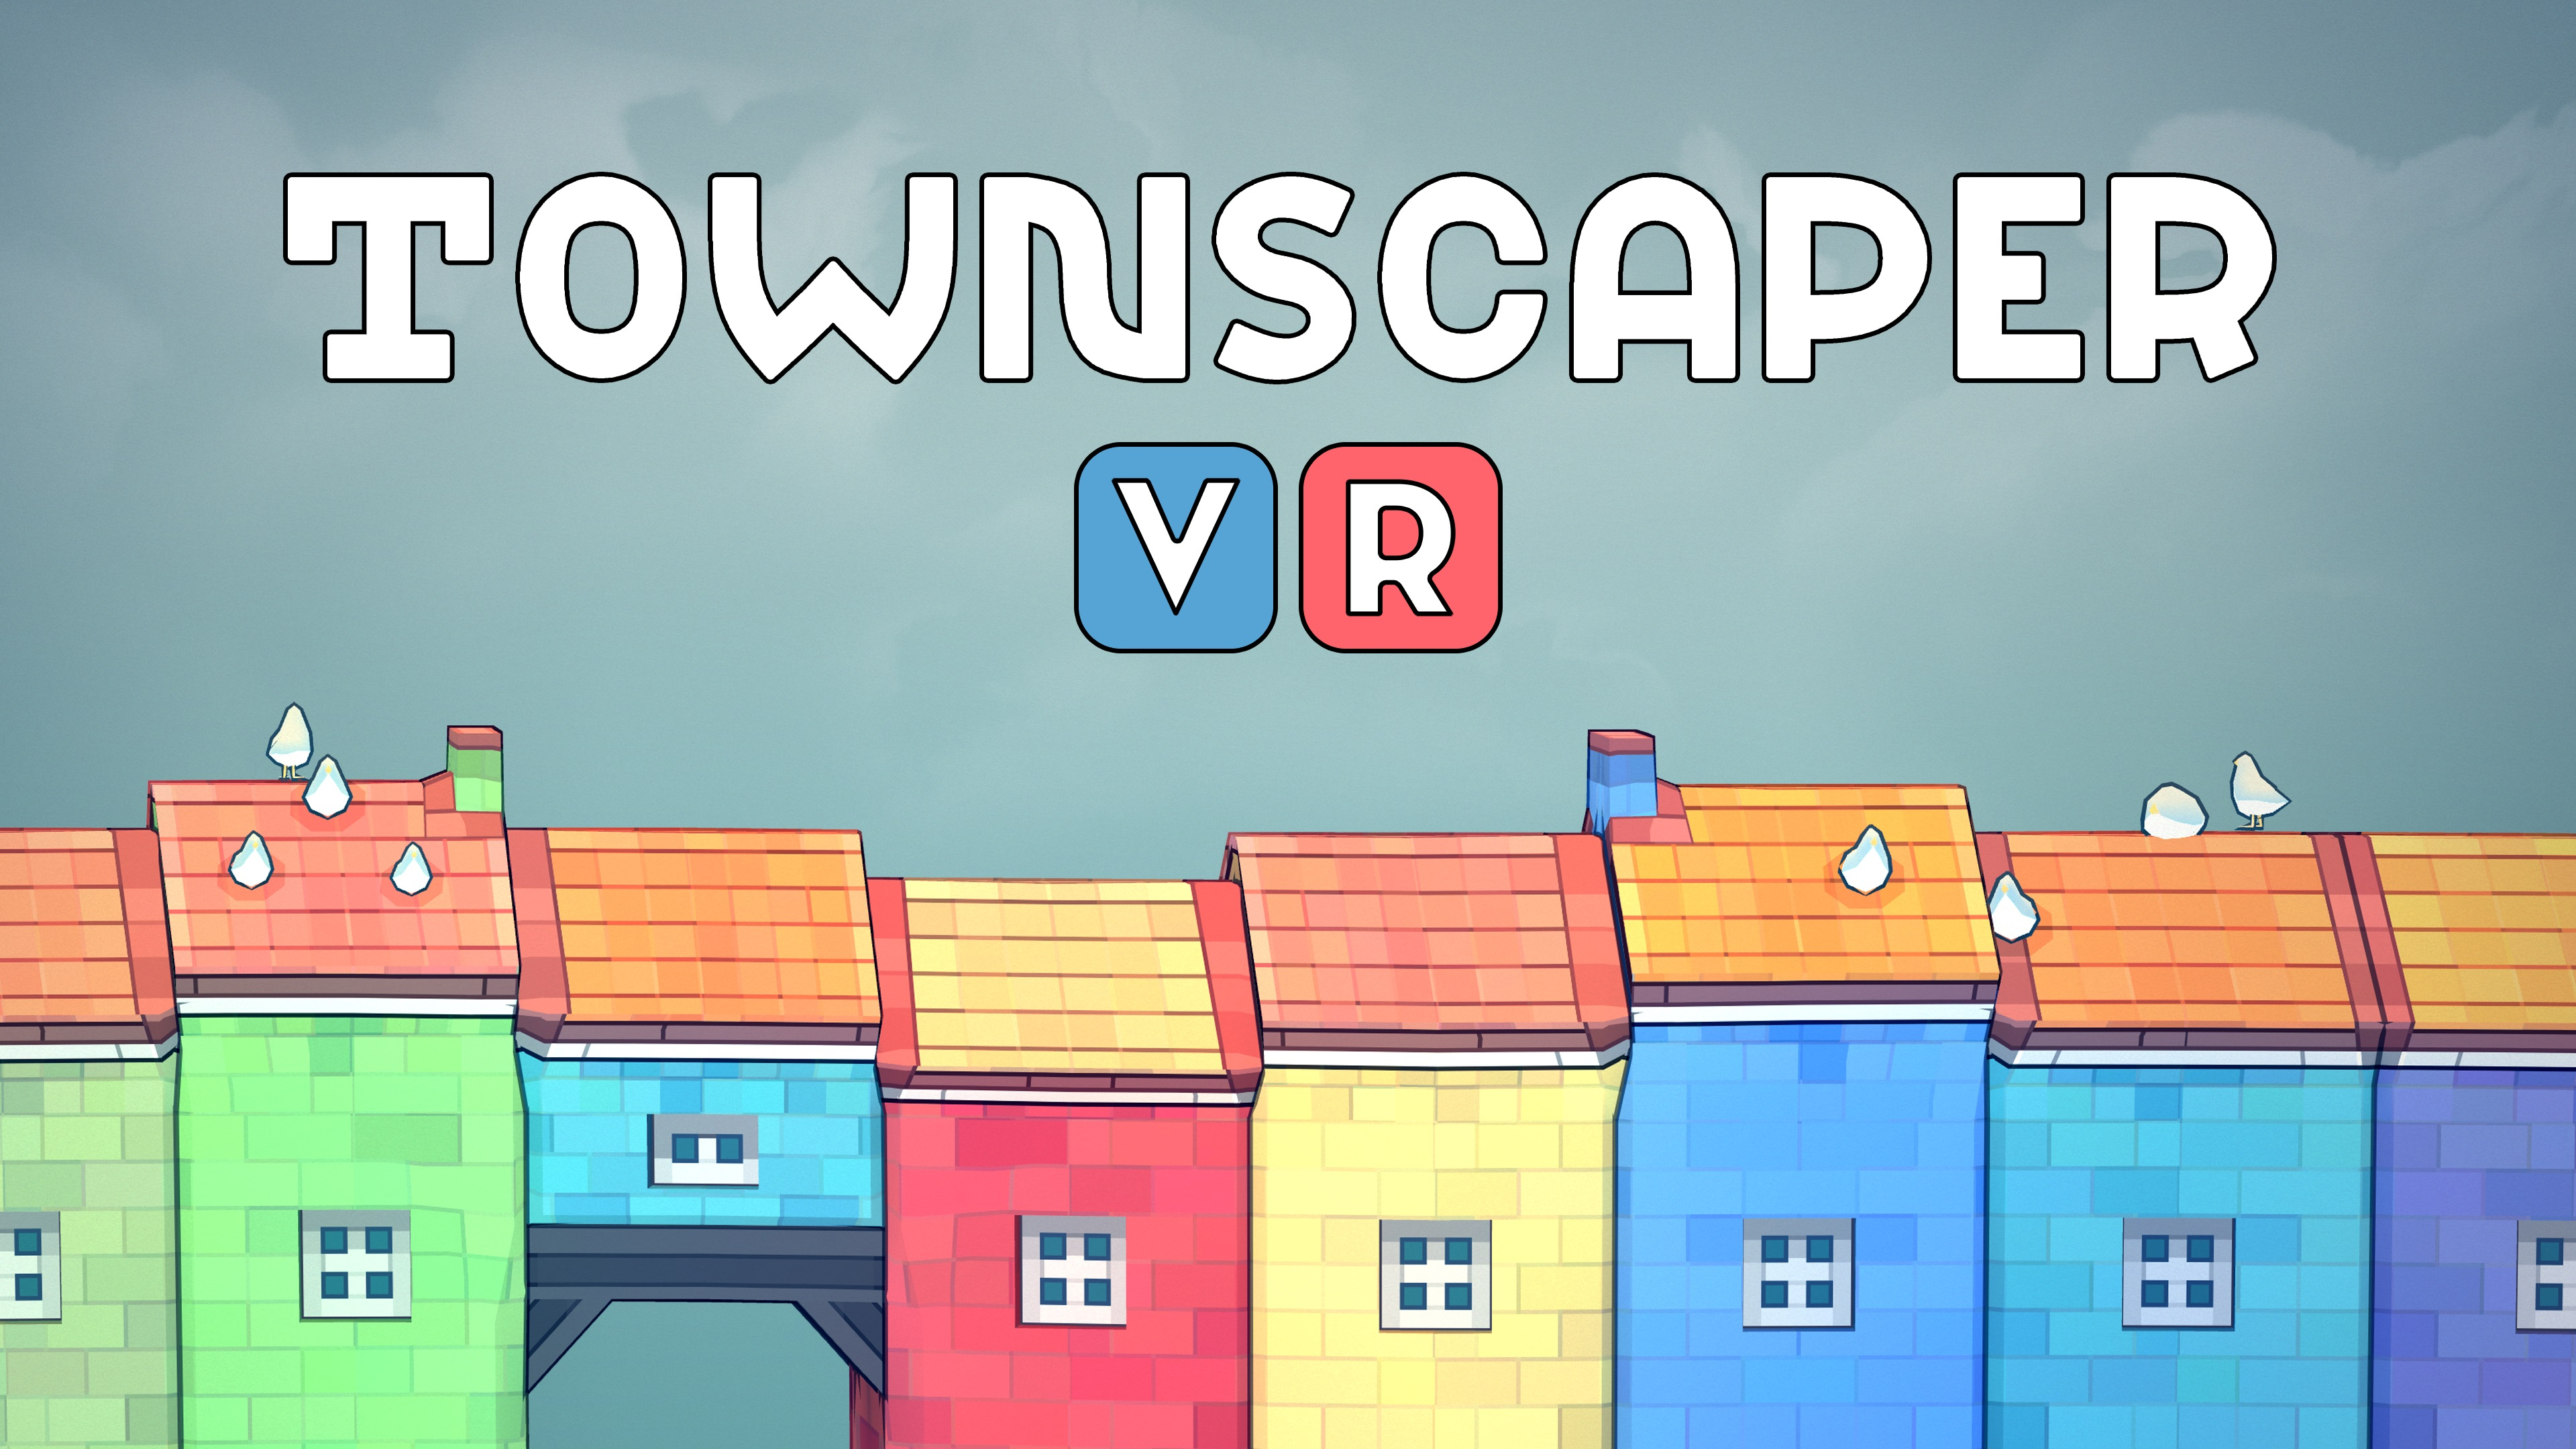     Townscaper    VR-